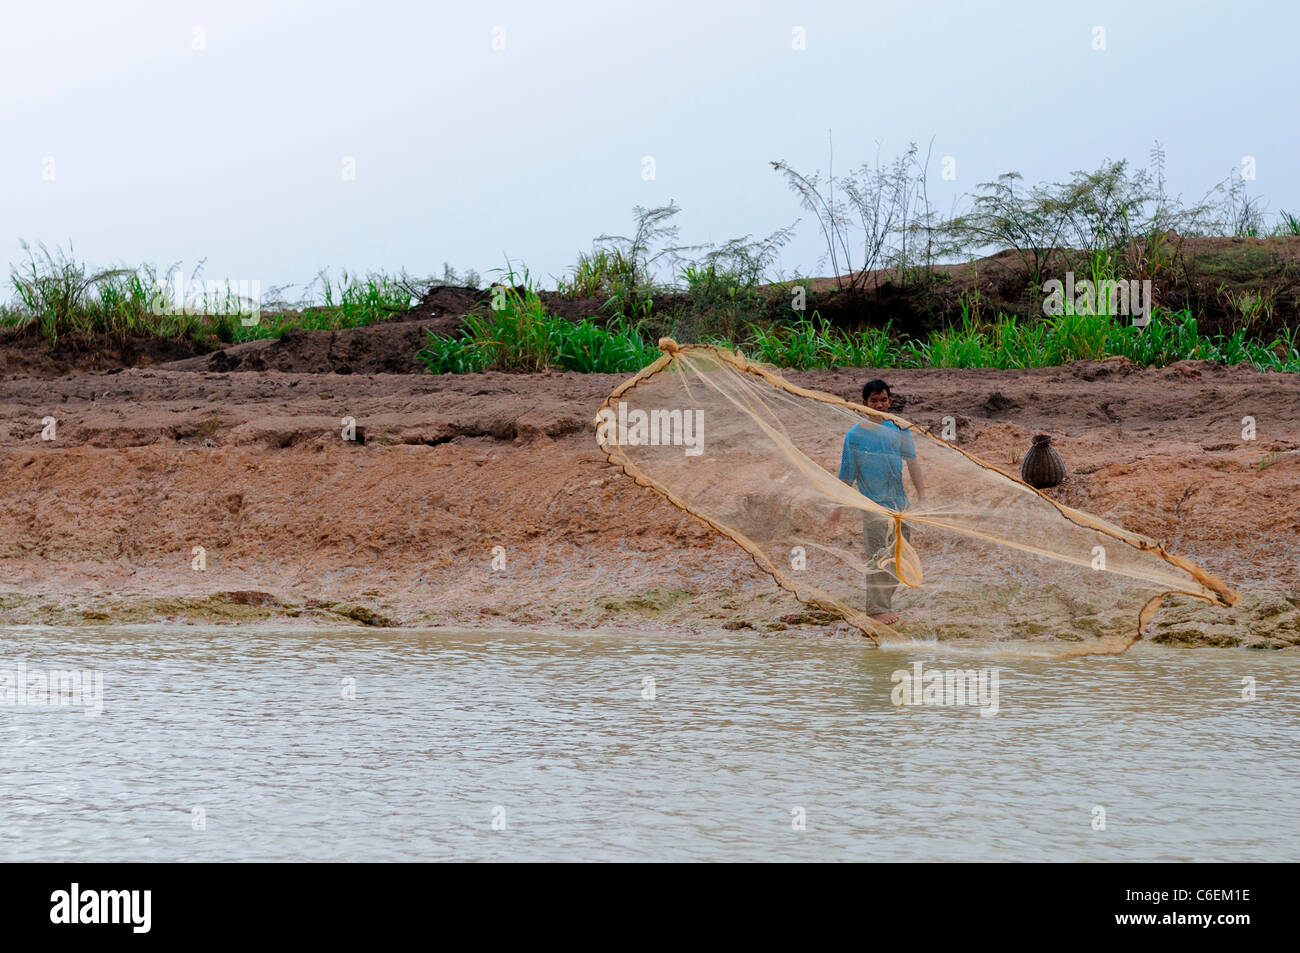 man cast casting throw throwing net fishing hand Tonle Sap